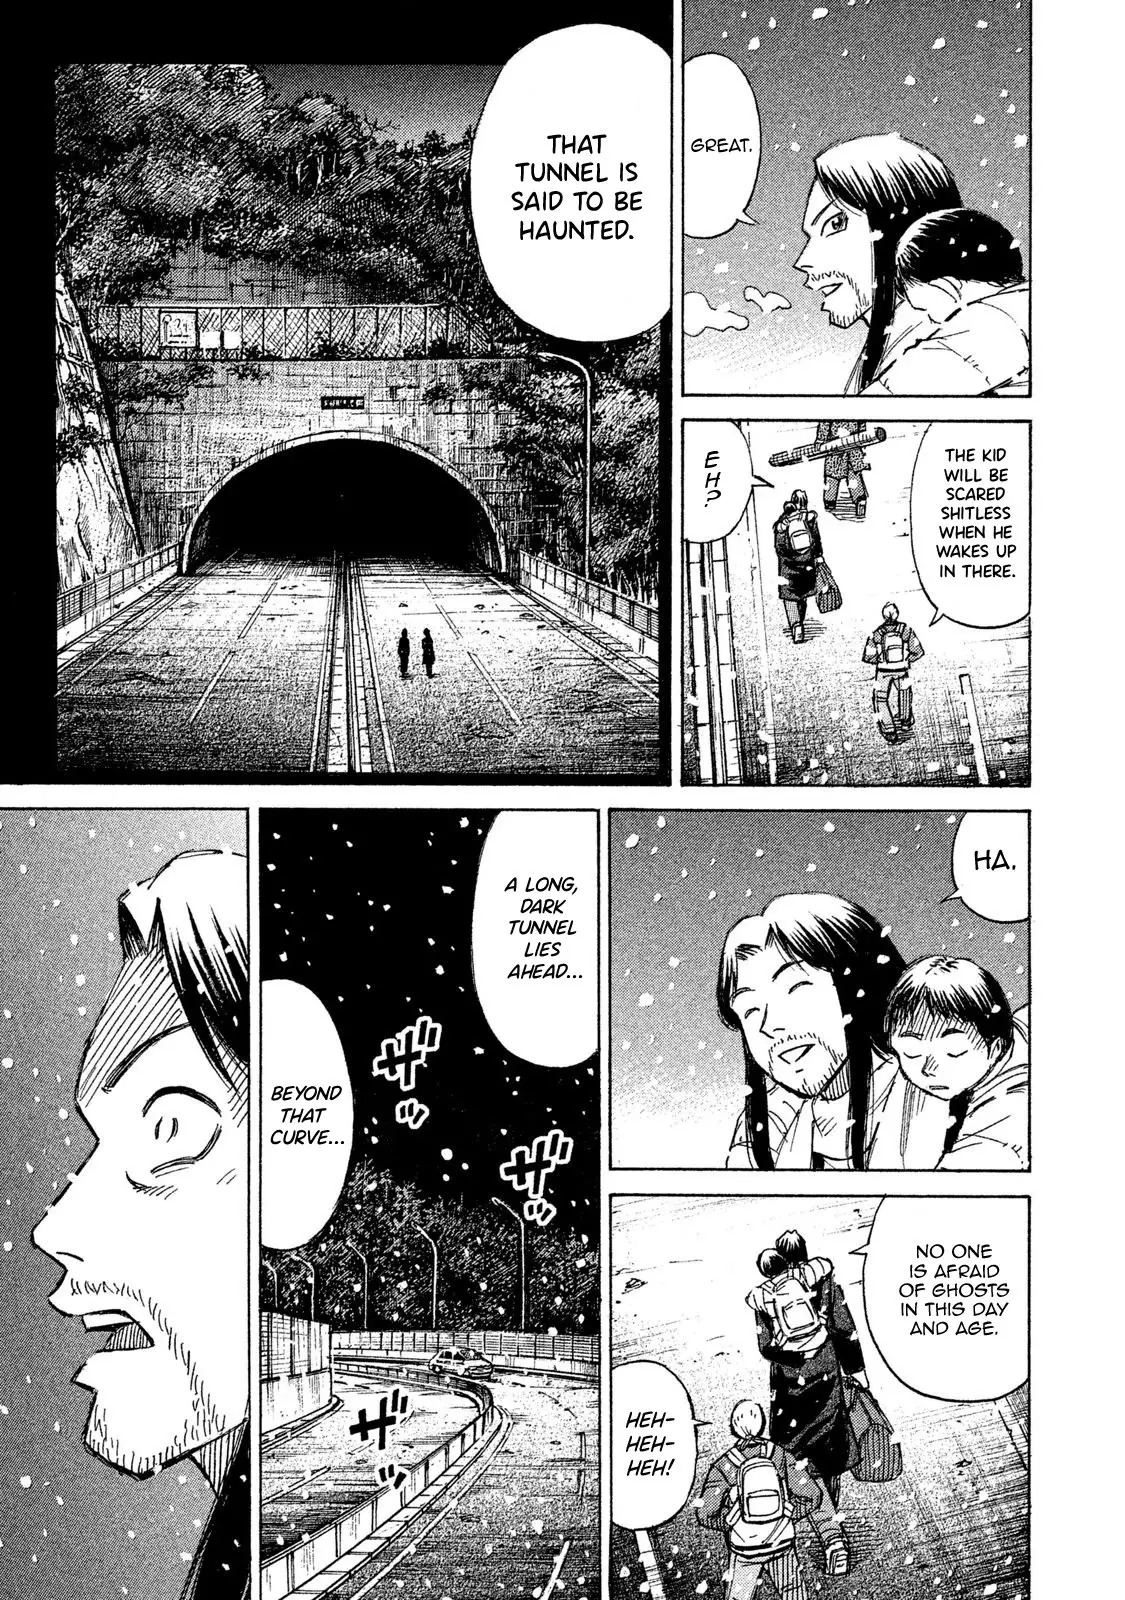 Higanjima - 48 Days Later - 22 page 12-4c057165